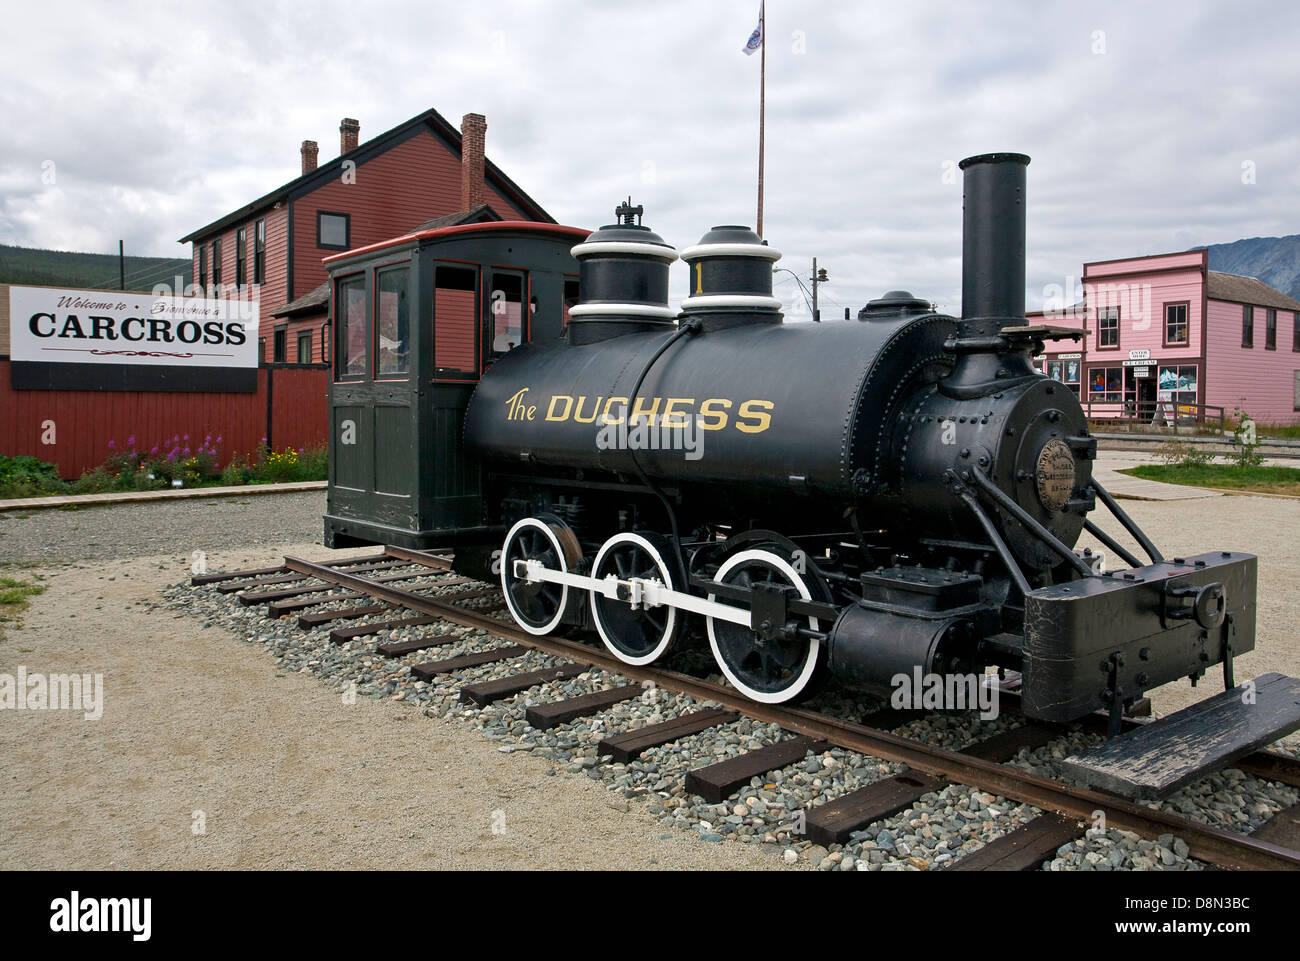 The Duchess. Restored steam locomotive. Carcross. Yukon. Canada Stock Photo